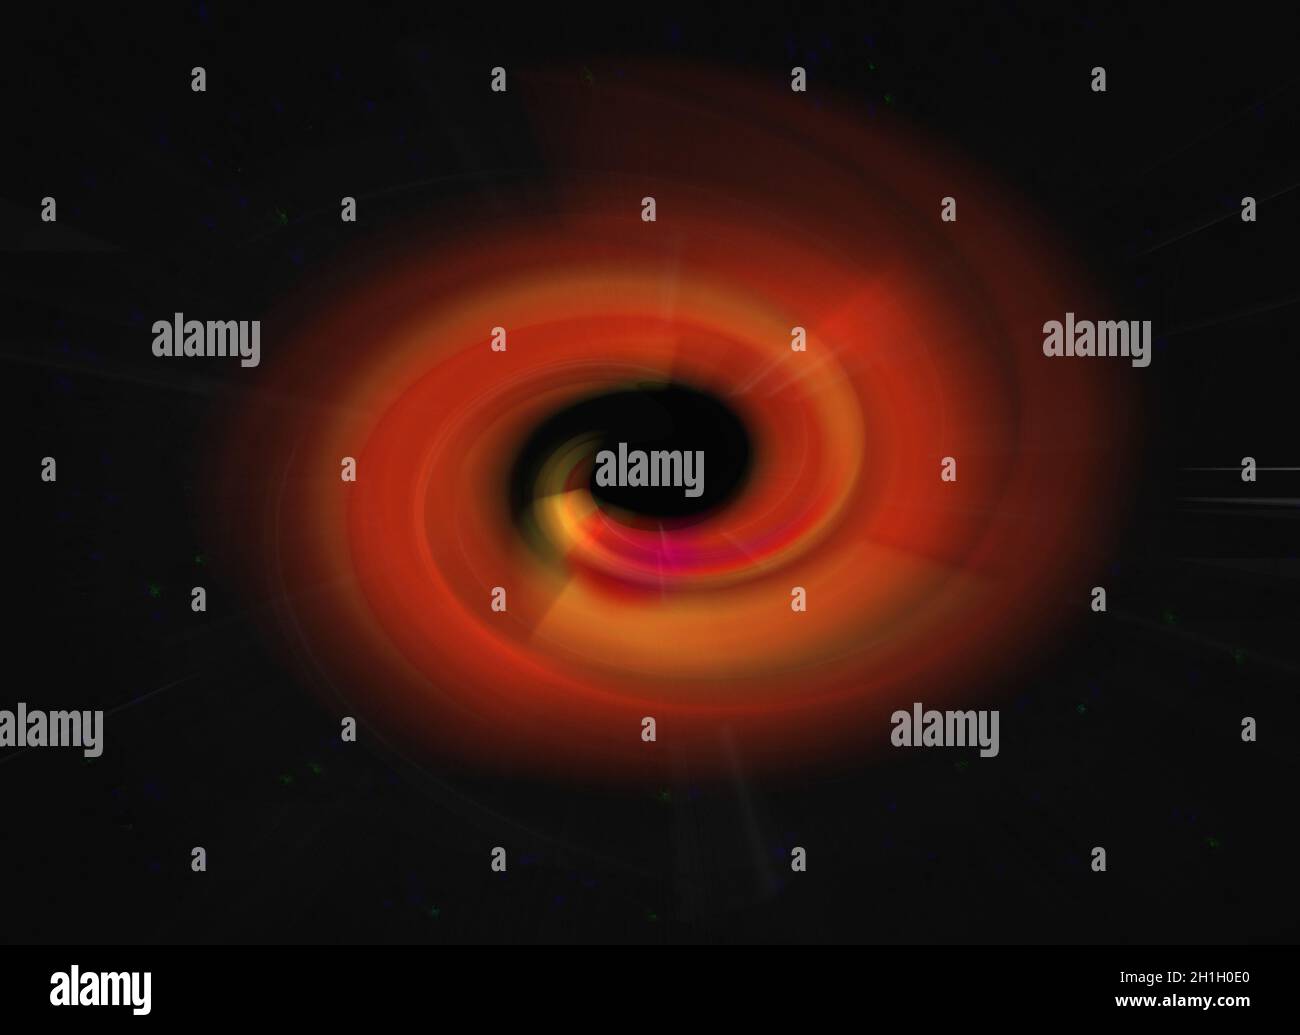 Encantada de conocerte Intenso mermelada Evento galáctico fotografías e imágenes de alta resolución - Alamy